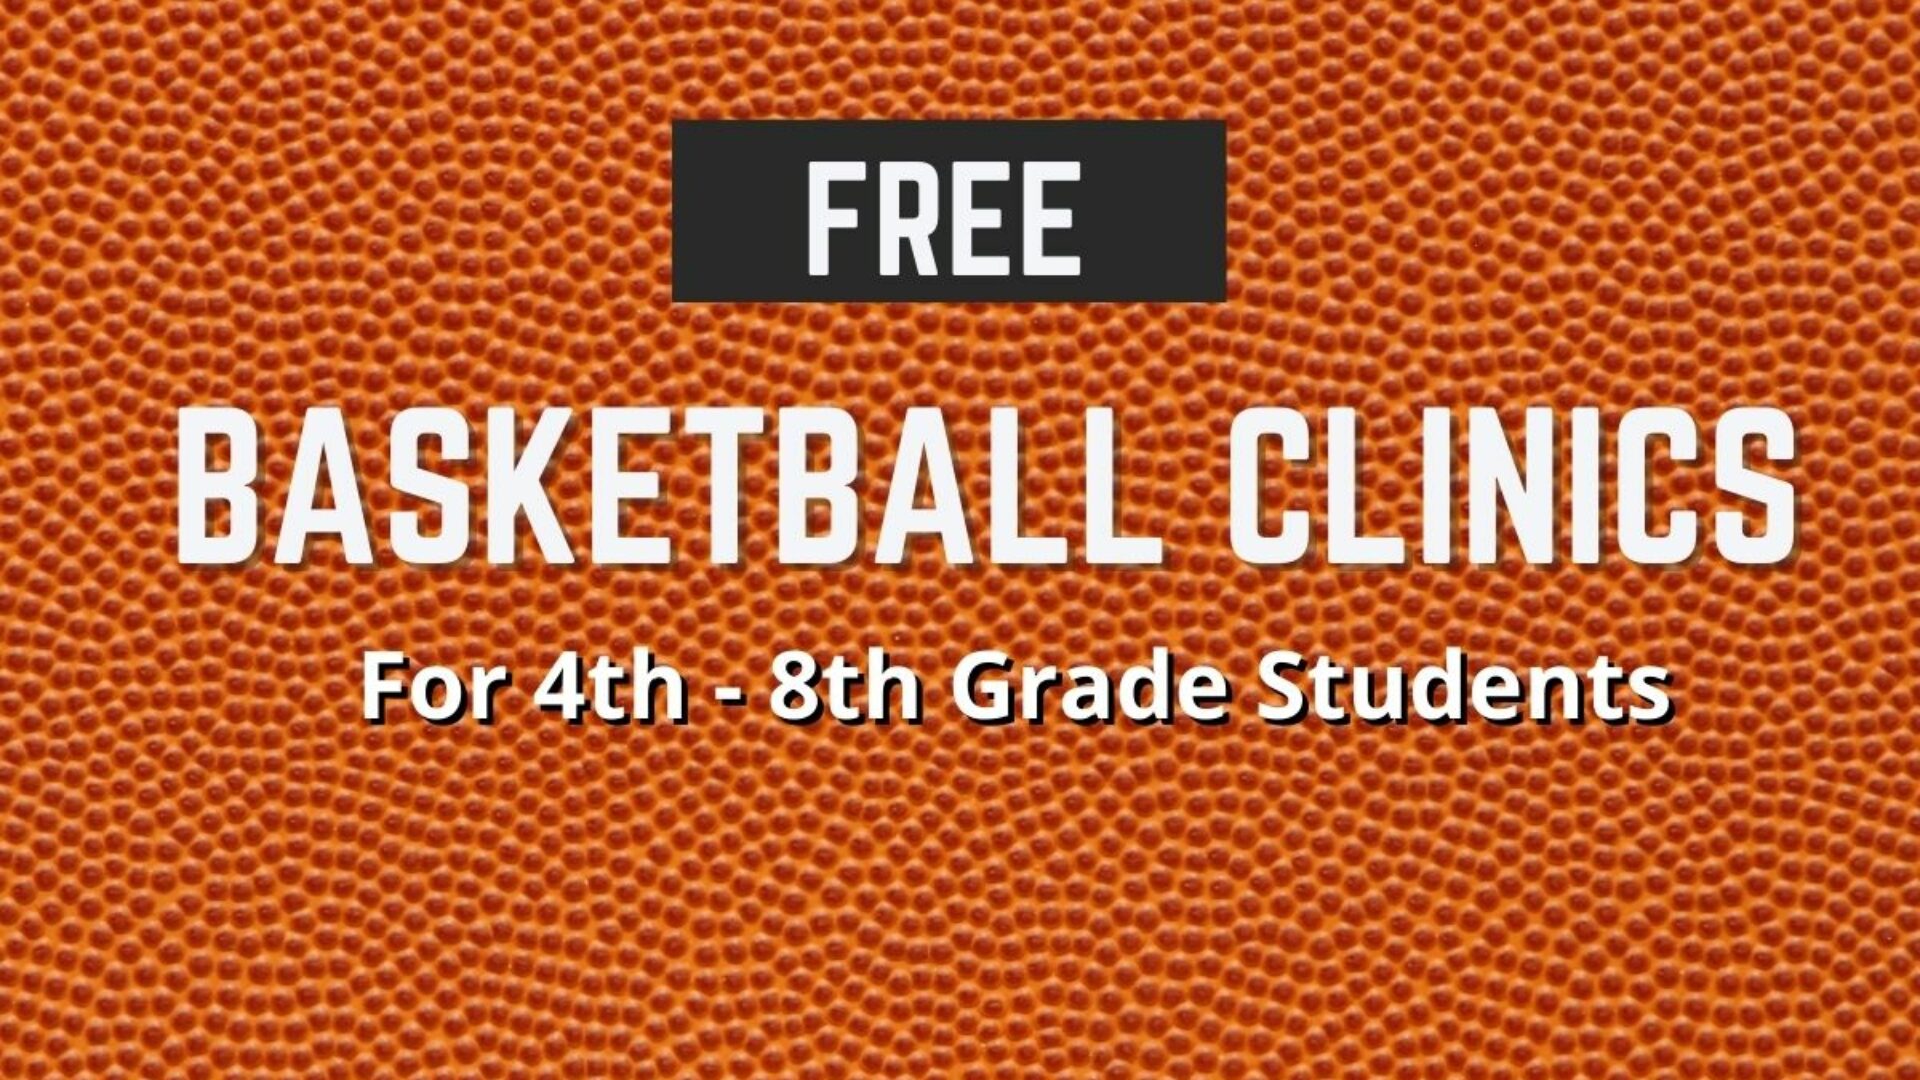 After School FREE Basketball Clinics